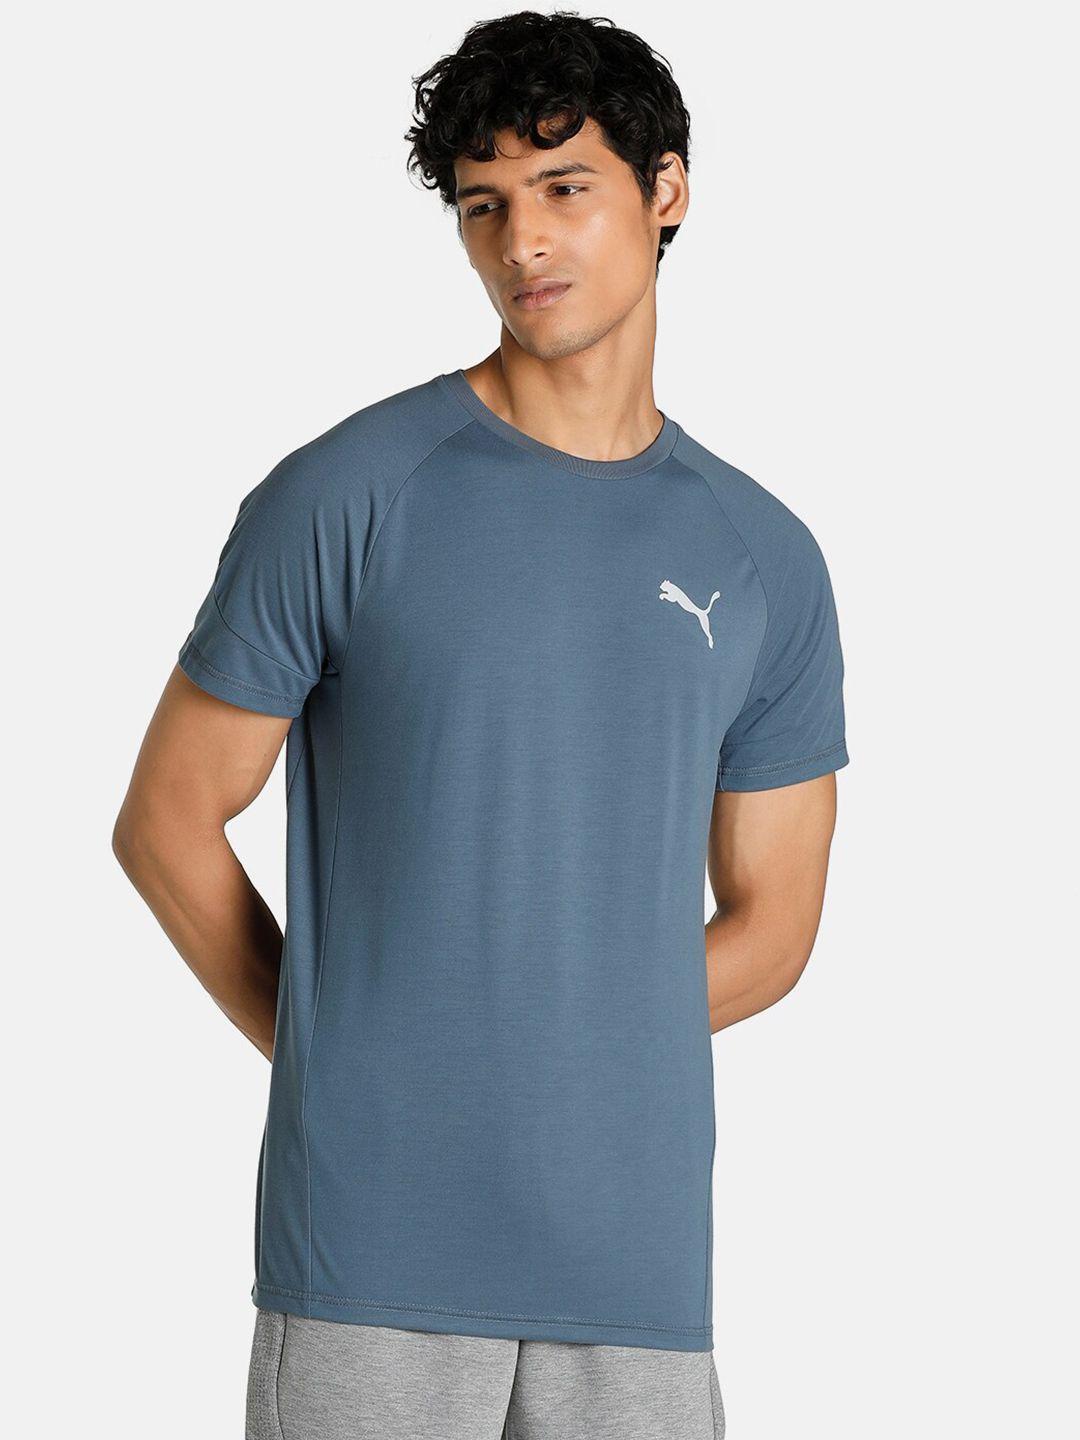 puma-men-grey-evostripe-t-shirt